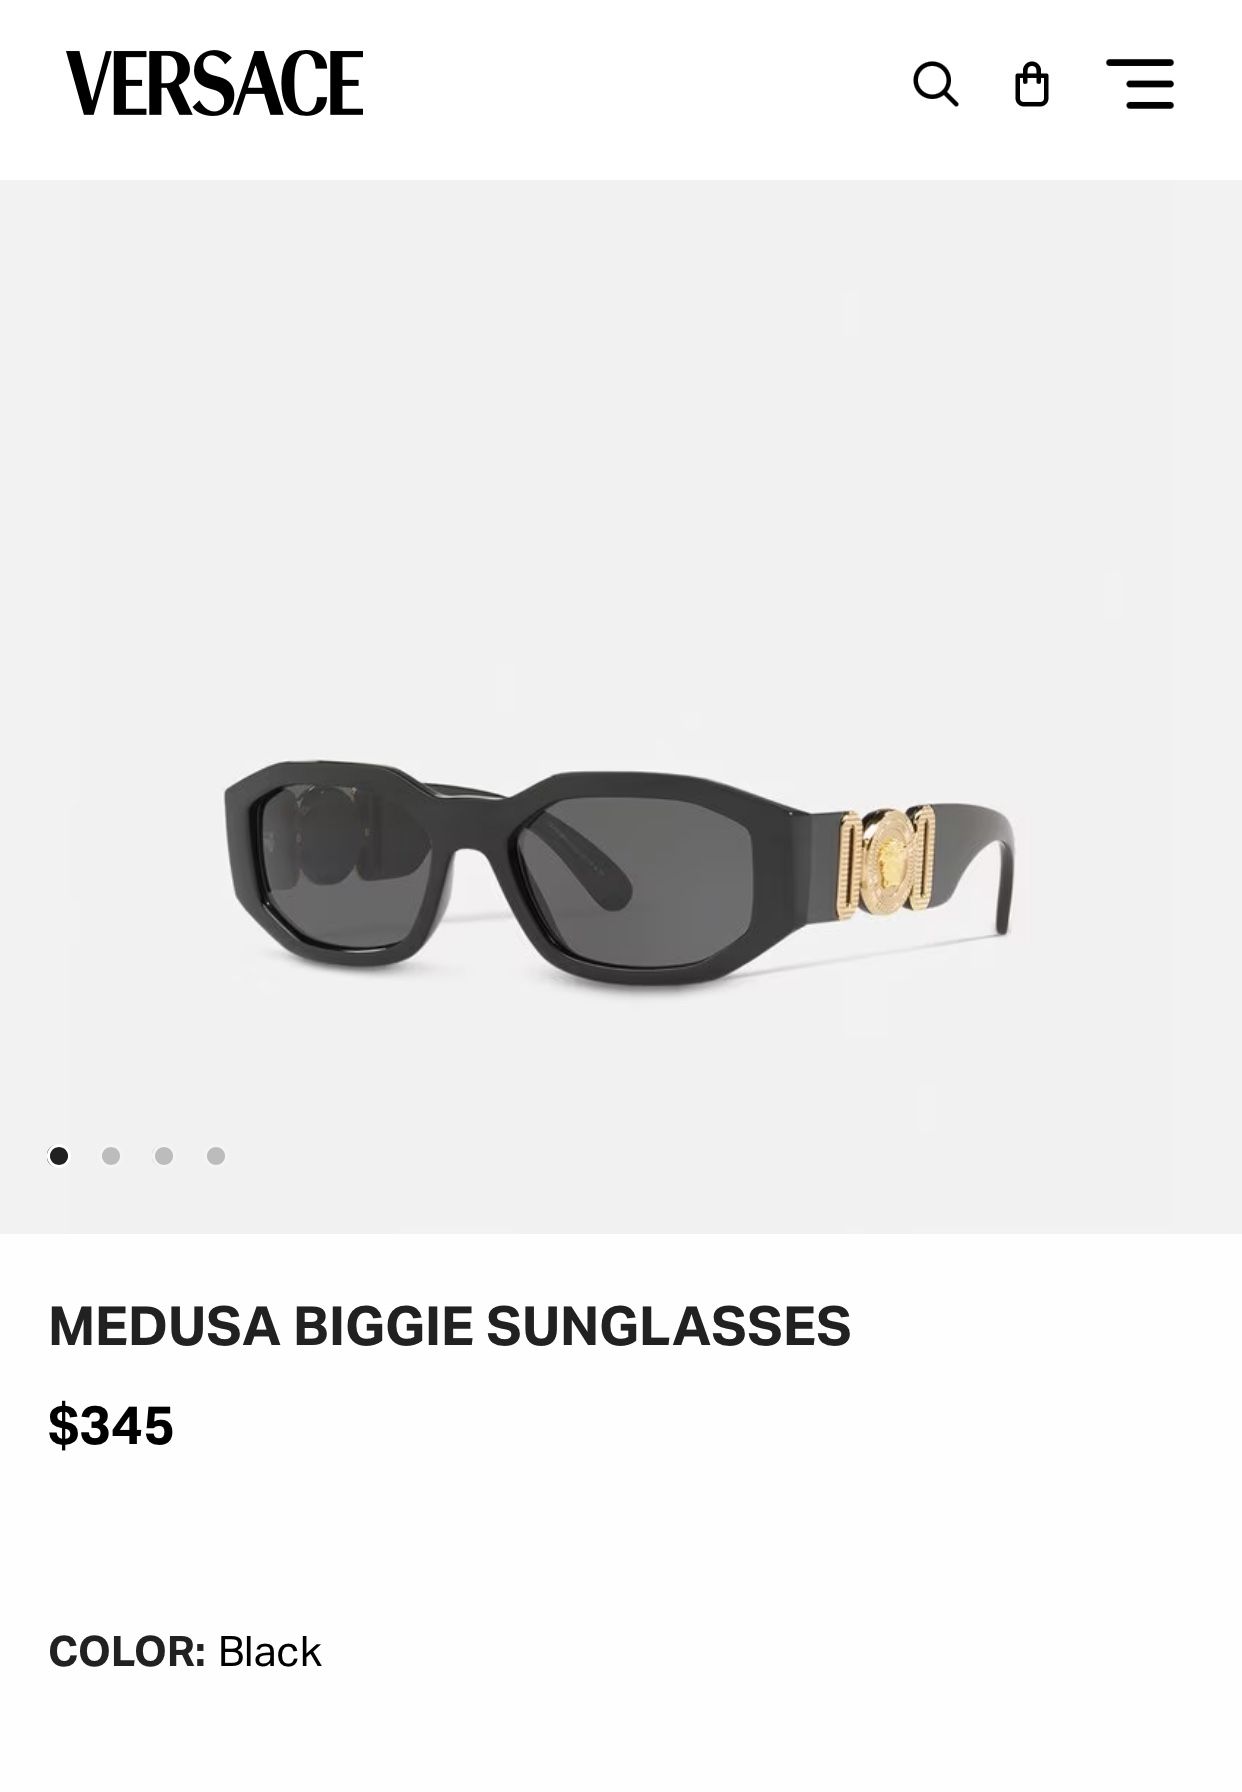 VERSCAE Sunglasses 